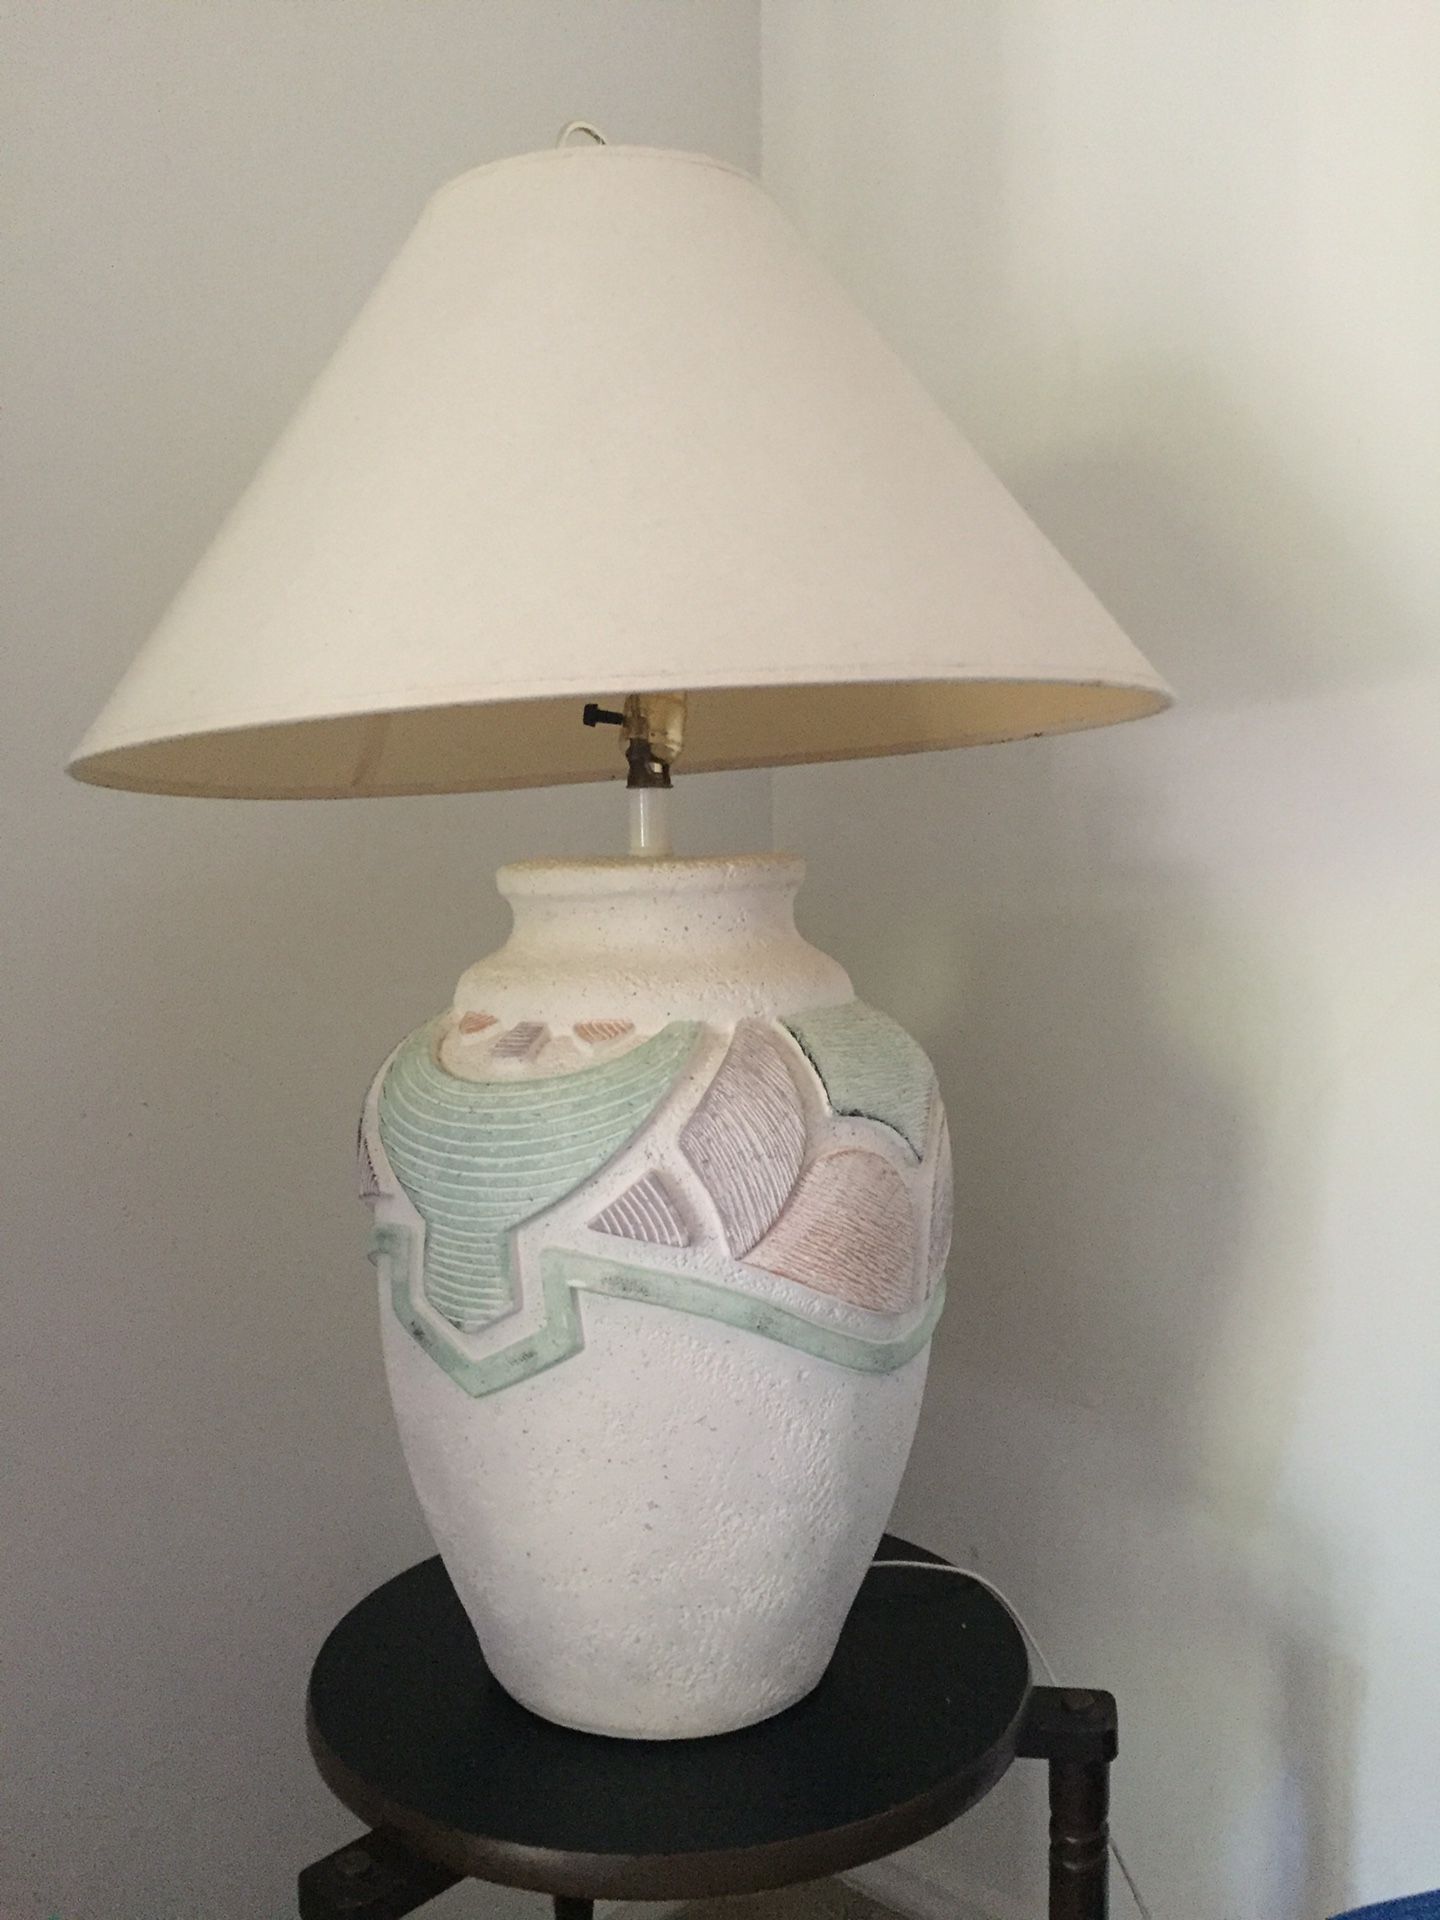 Really nice Lamp